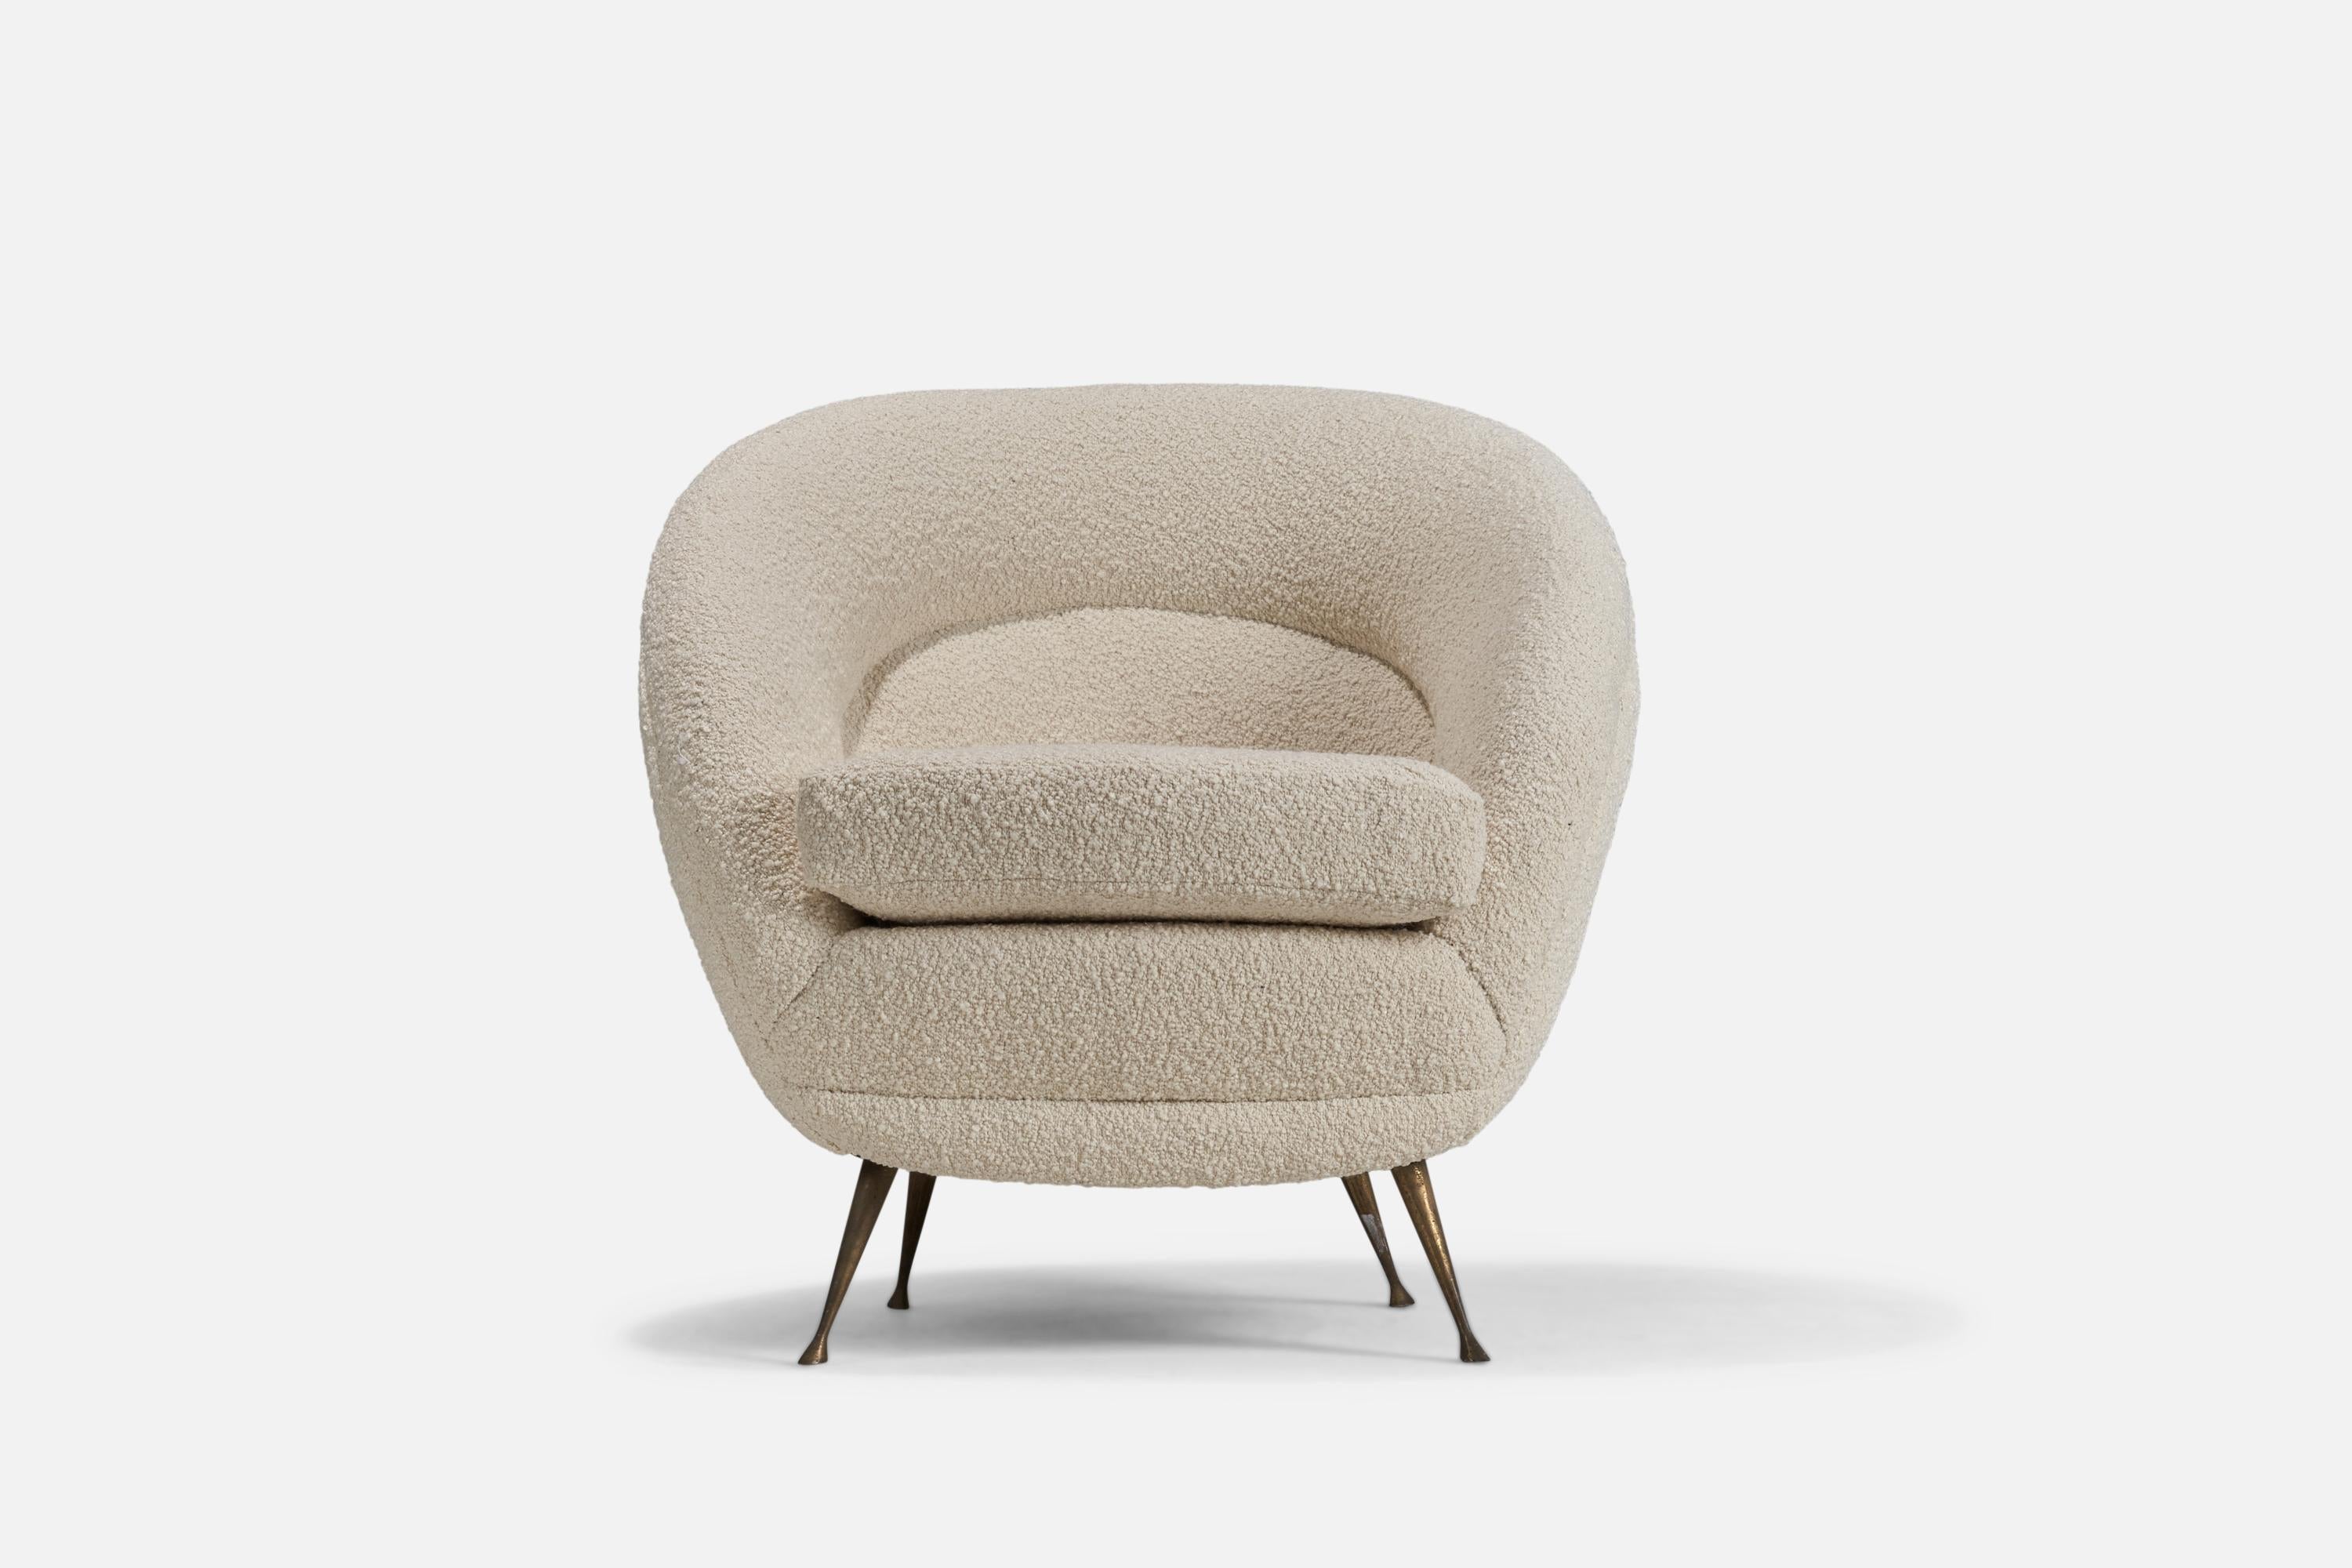 Mid-20th Century Federico Munari, Lounge Chairs, White Fabric, Brass, Isa Bergamo, Italy, 1950s For Sale